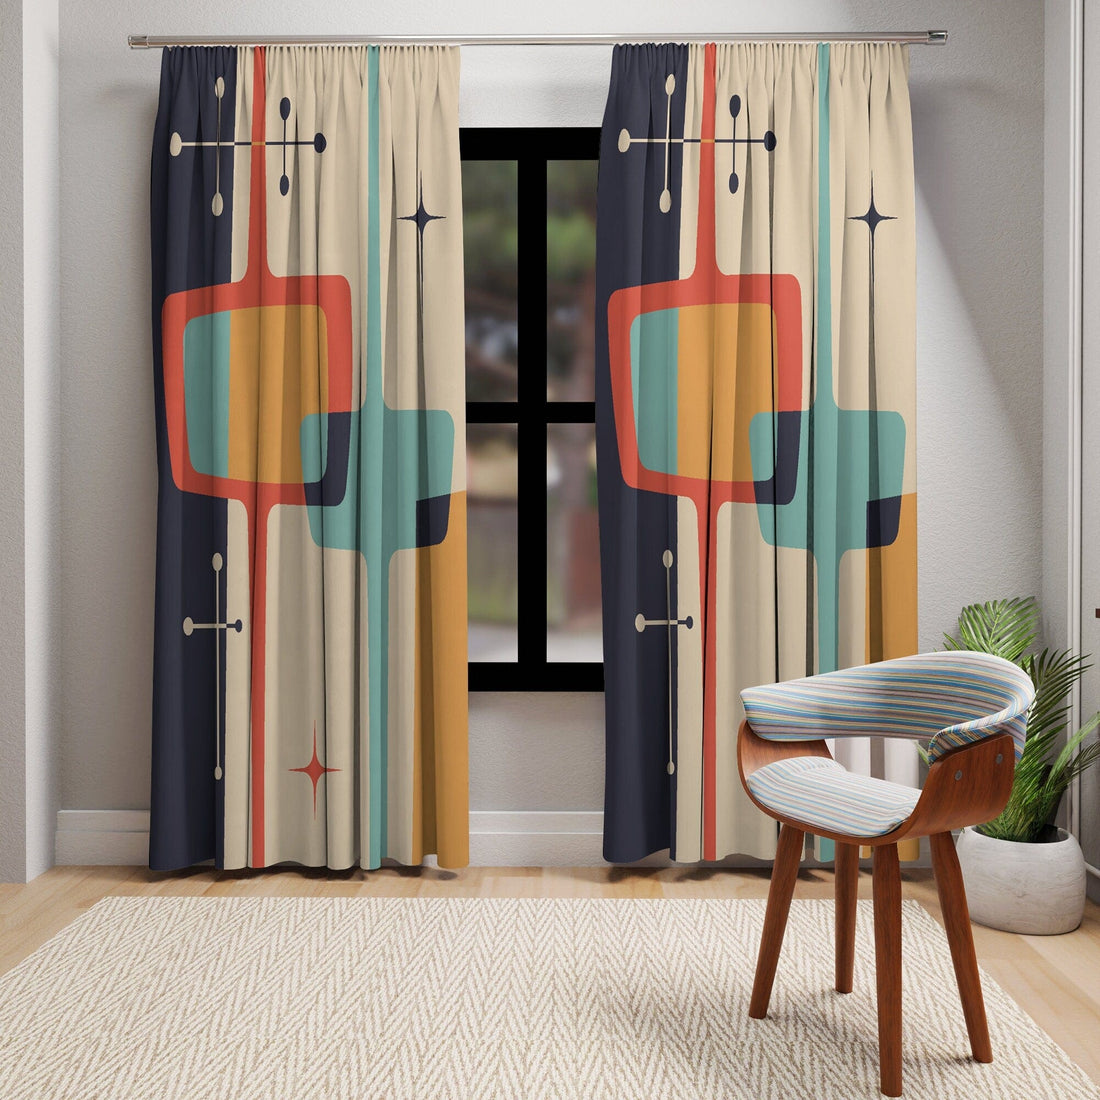 Kate McEnroe New York Window Curtain in Mid Century Modern Atomic StarburstWindow Curtains50x84 - DoublePanel